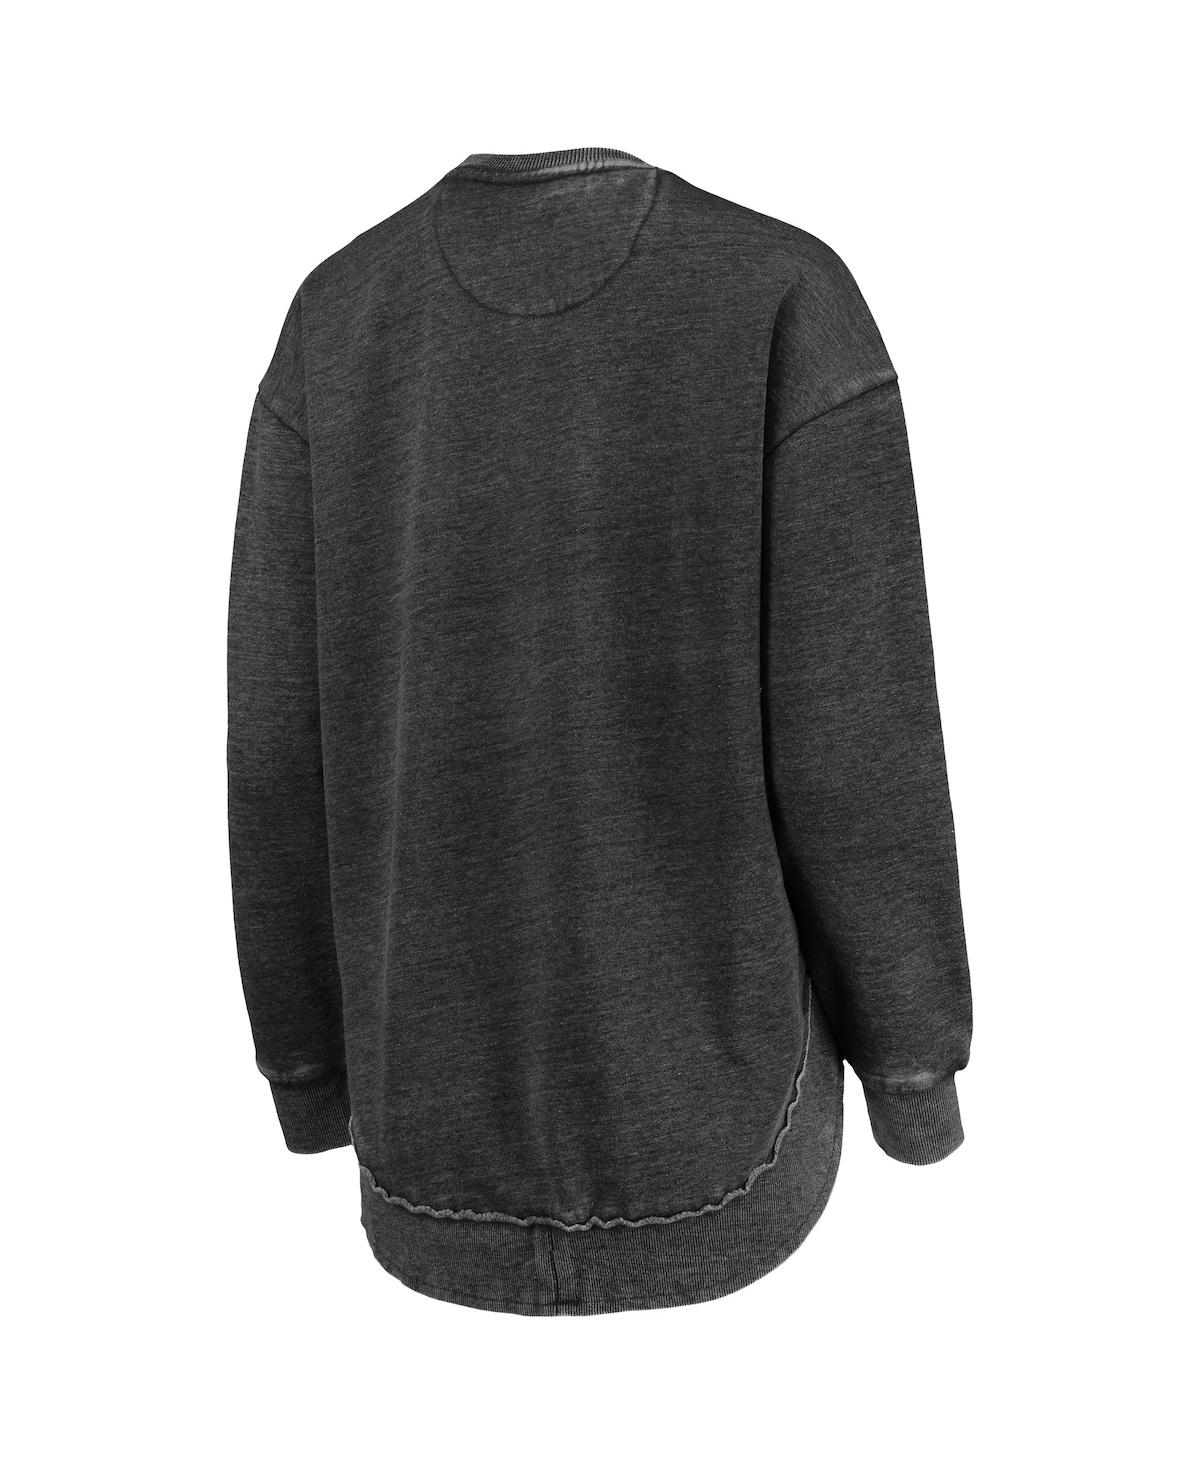 Shop Pressbox Women's  Black Distressed Cincinnati Bearcats Vintage-like Wash Pullover Sweatshirt